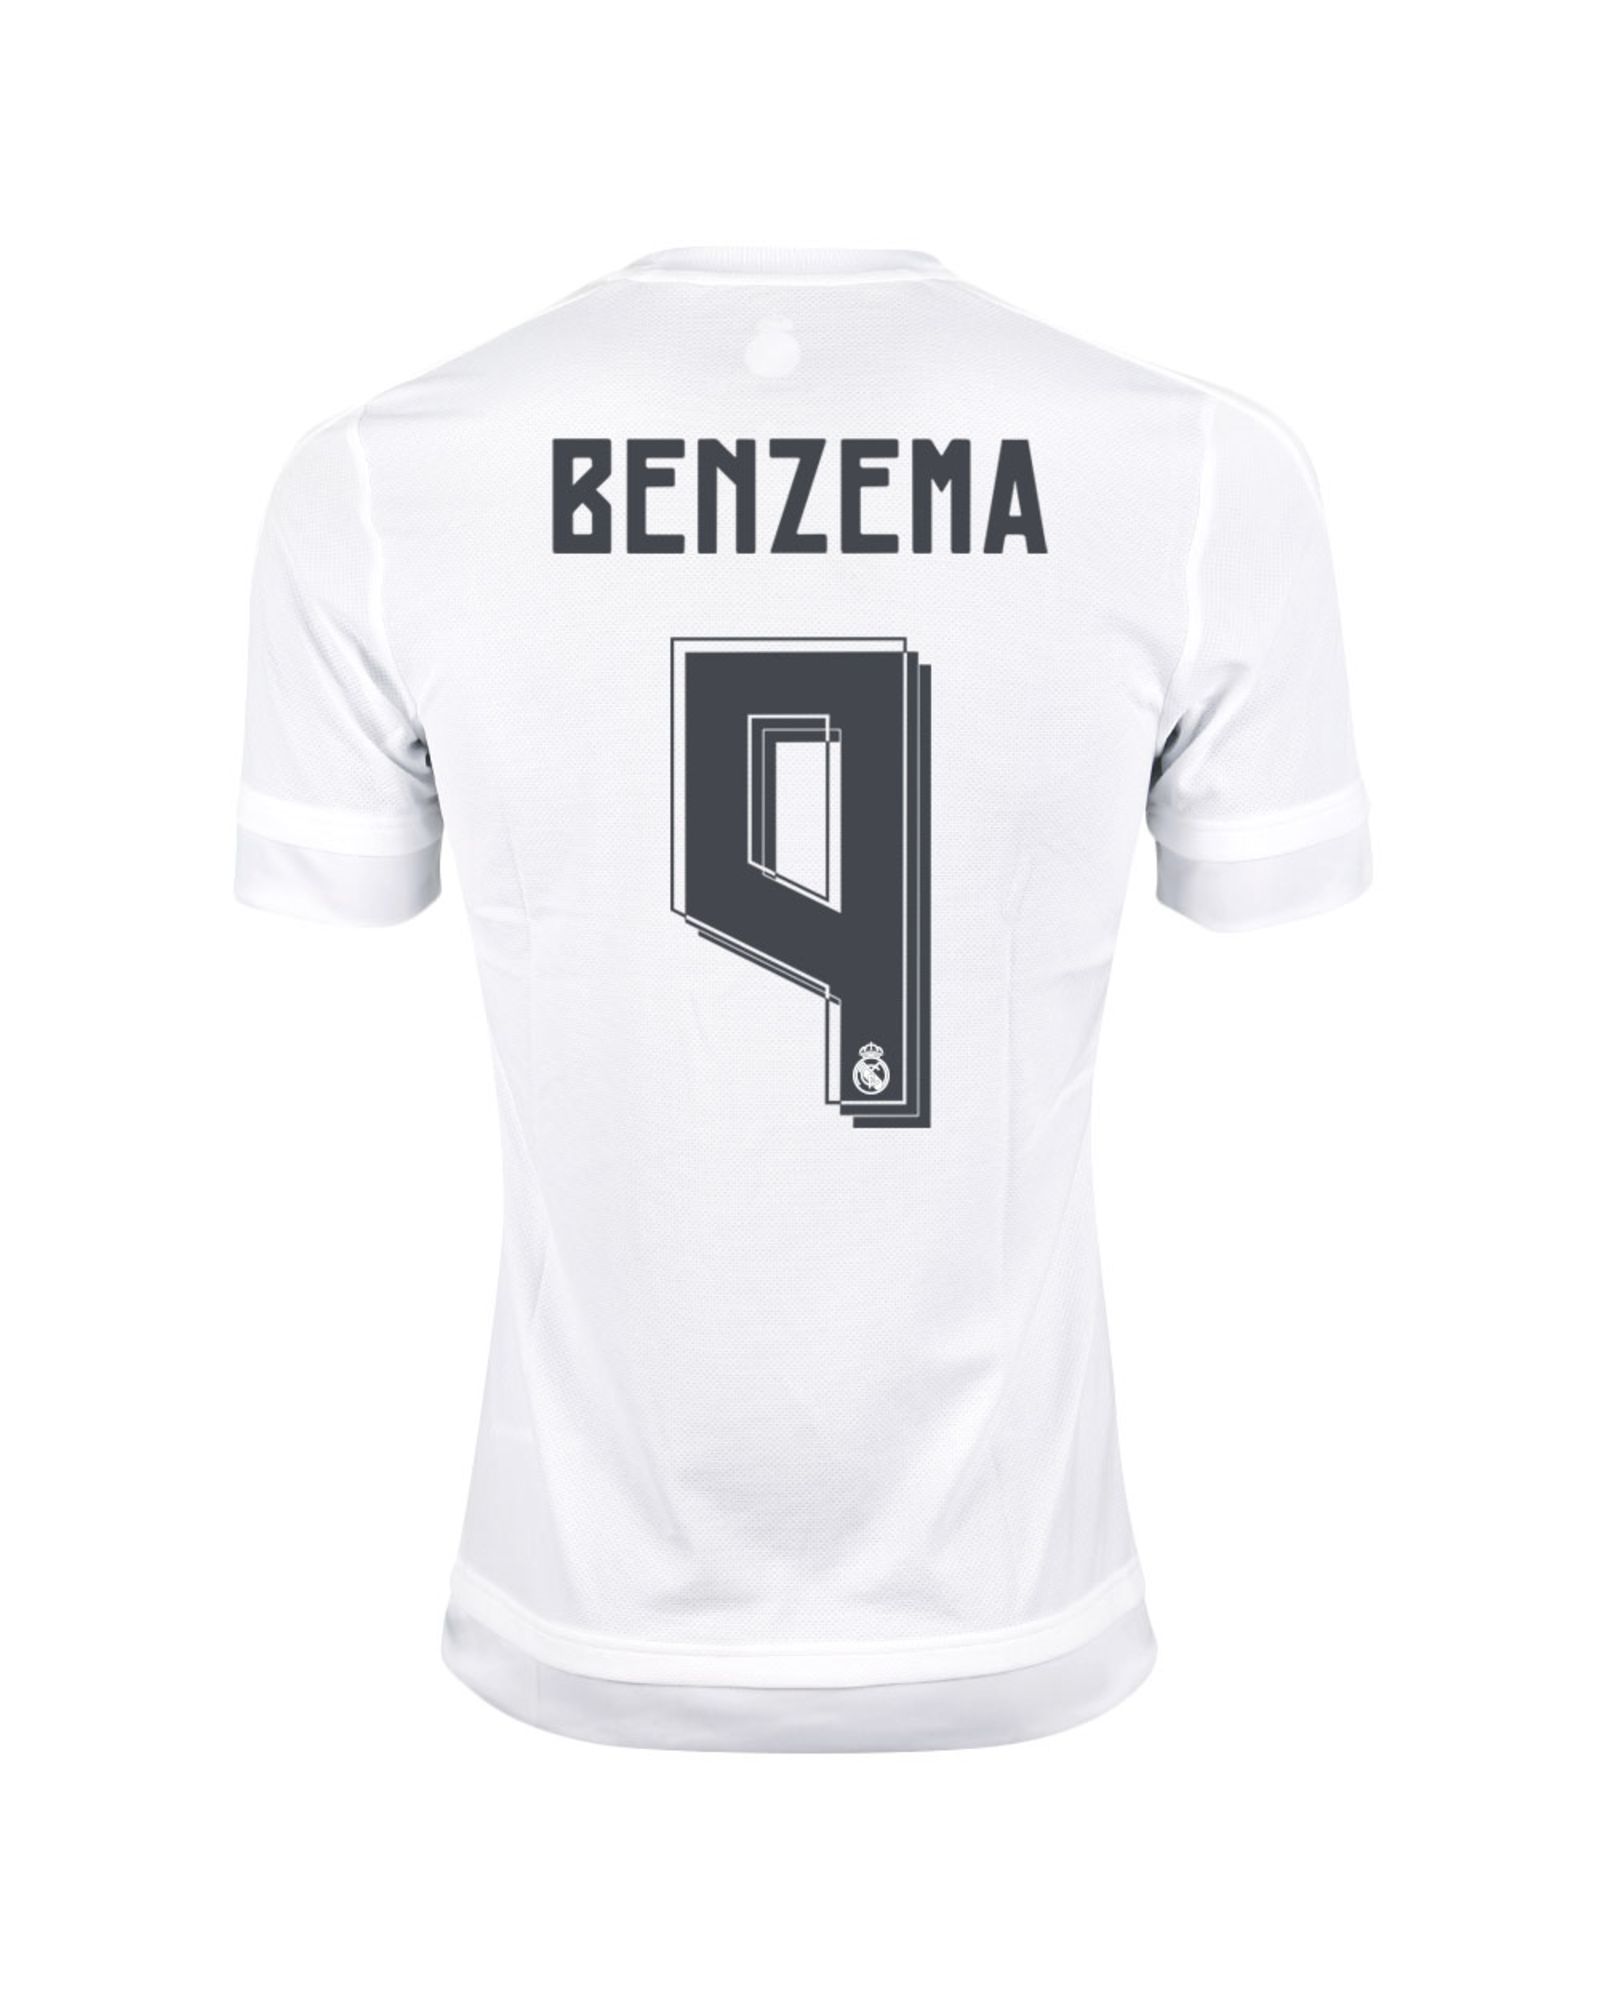 Camiseta 1ª Real Madrid 2015/2016 Benzema Authentic - Fútbol Factory